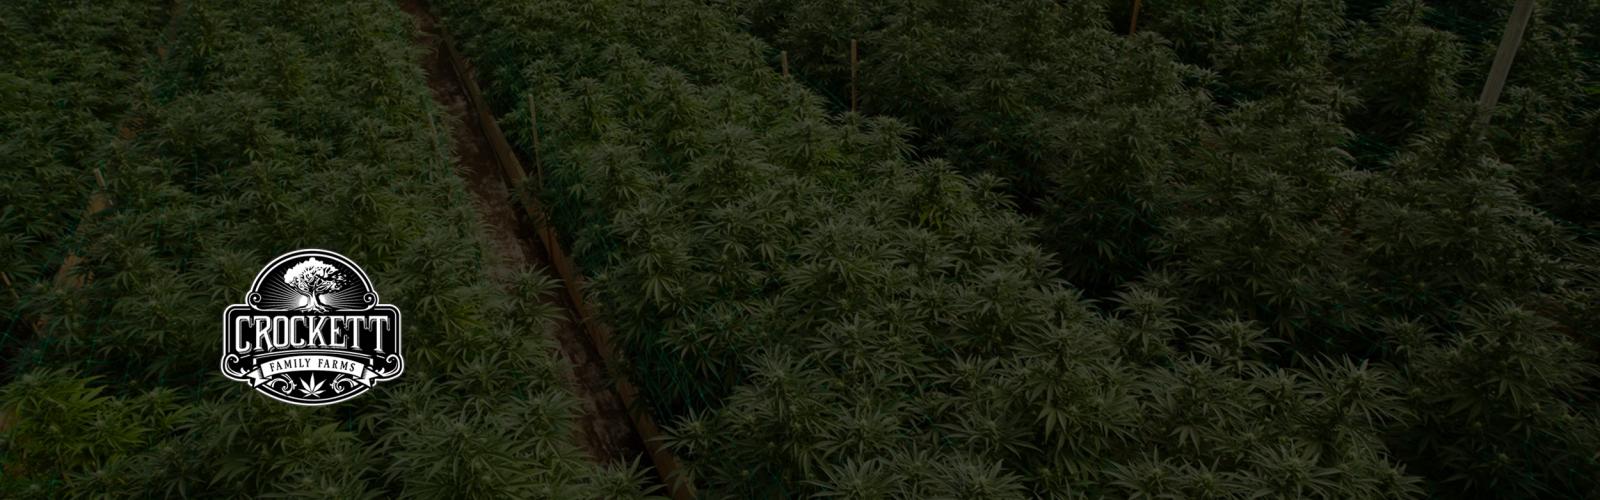 Graines de Cannabis Régulières Crockett Family Farms